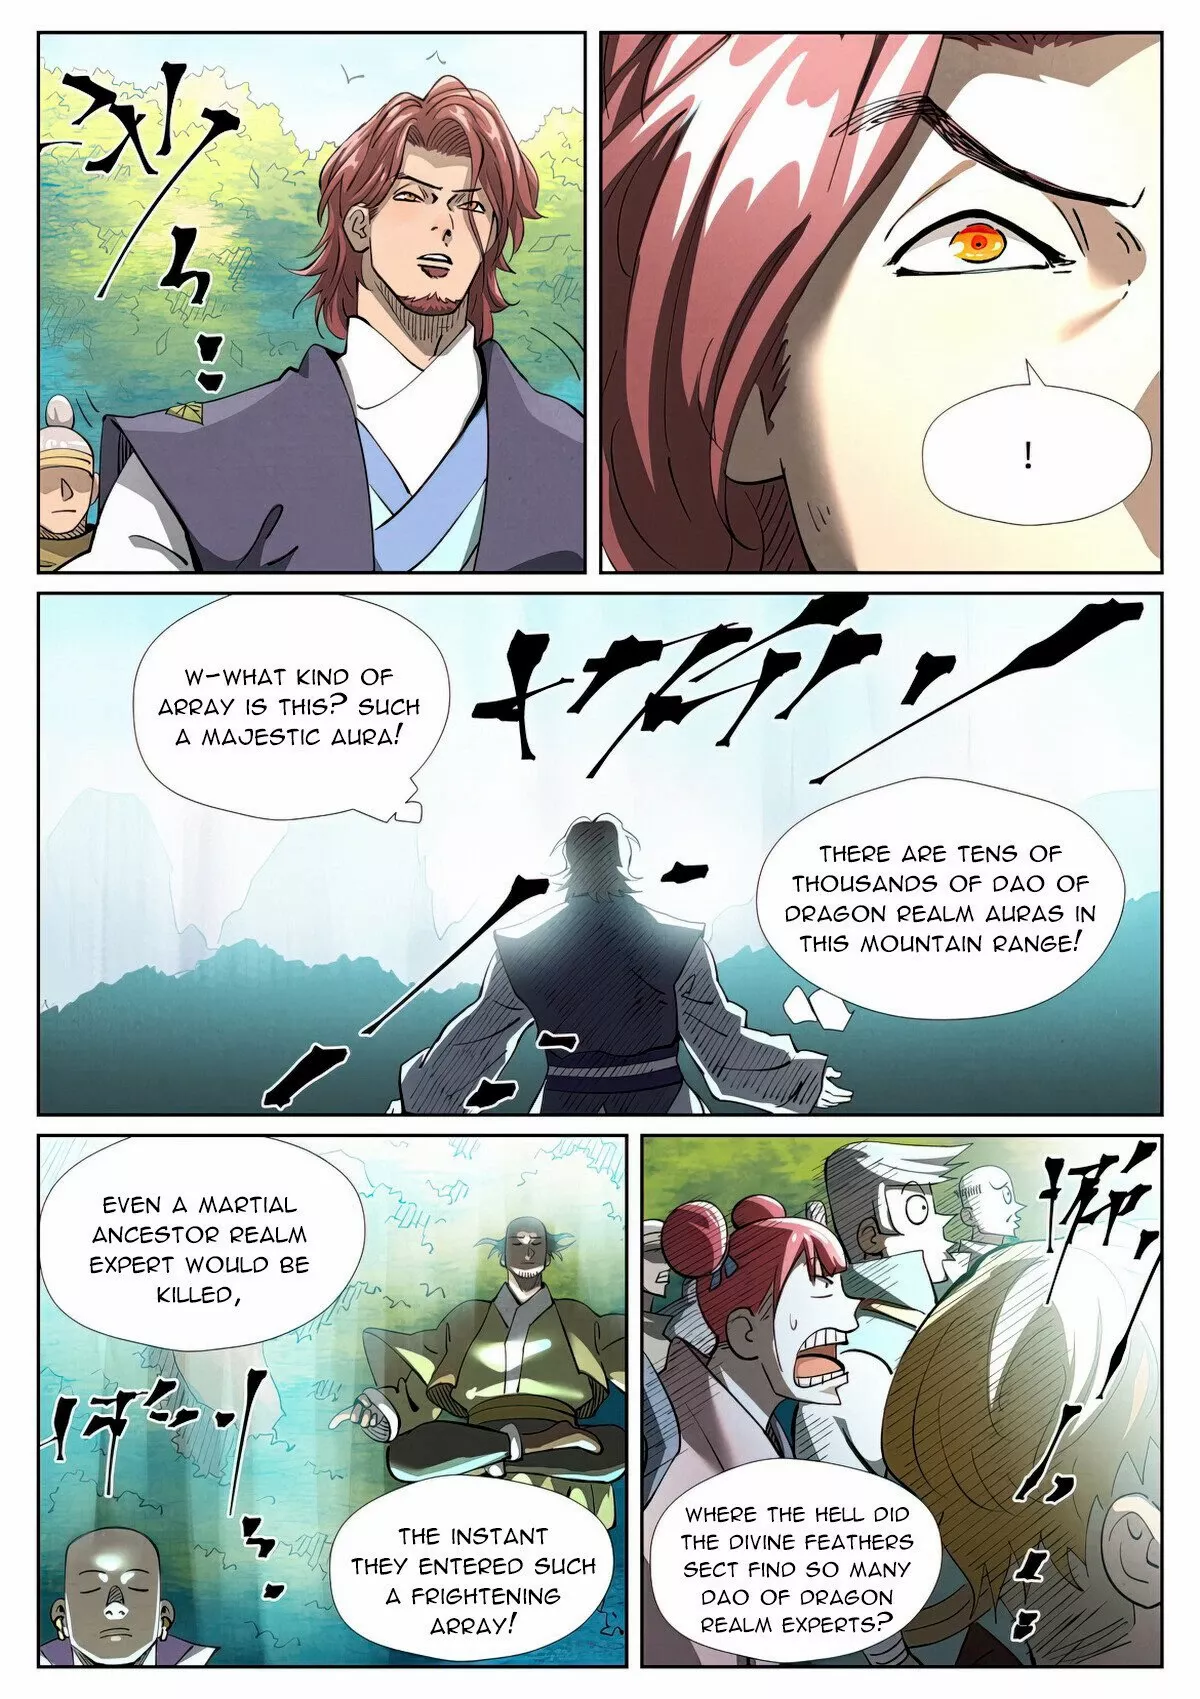 Tales Of Demons And Gods Chapter 430.6 page 8 - Mangakakalot